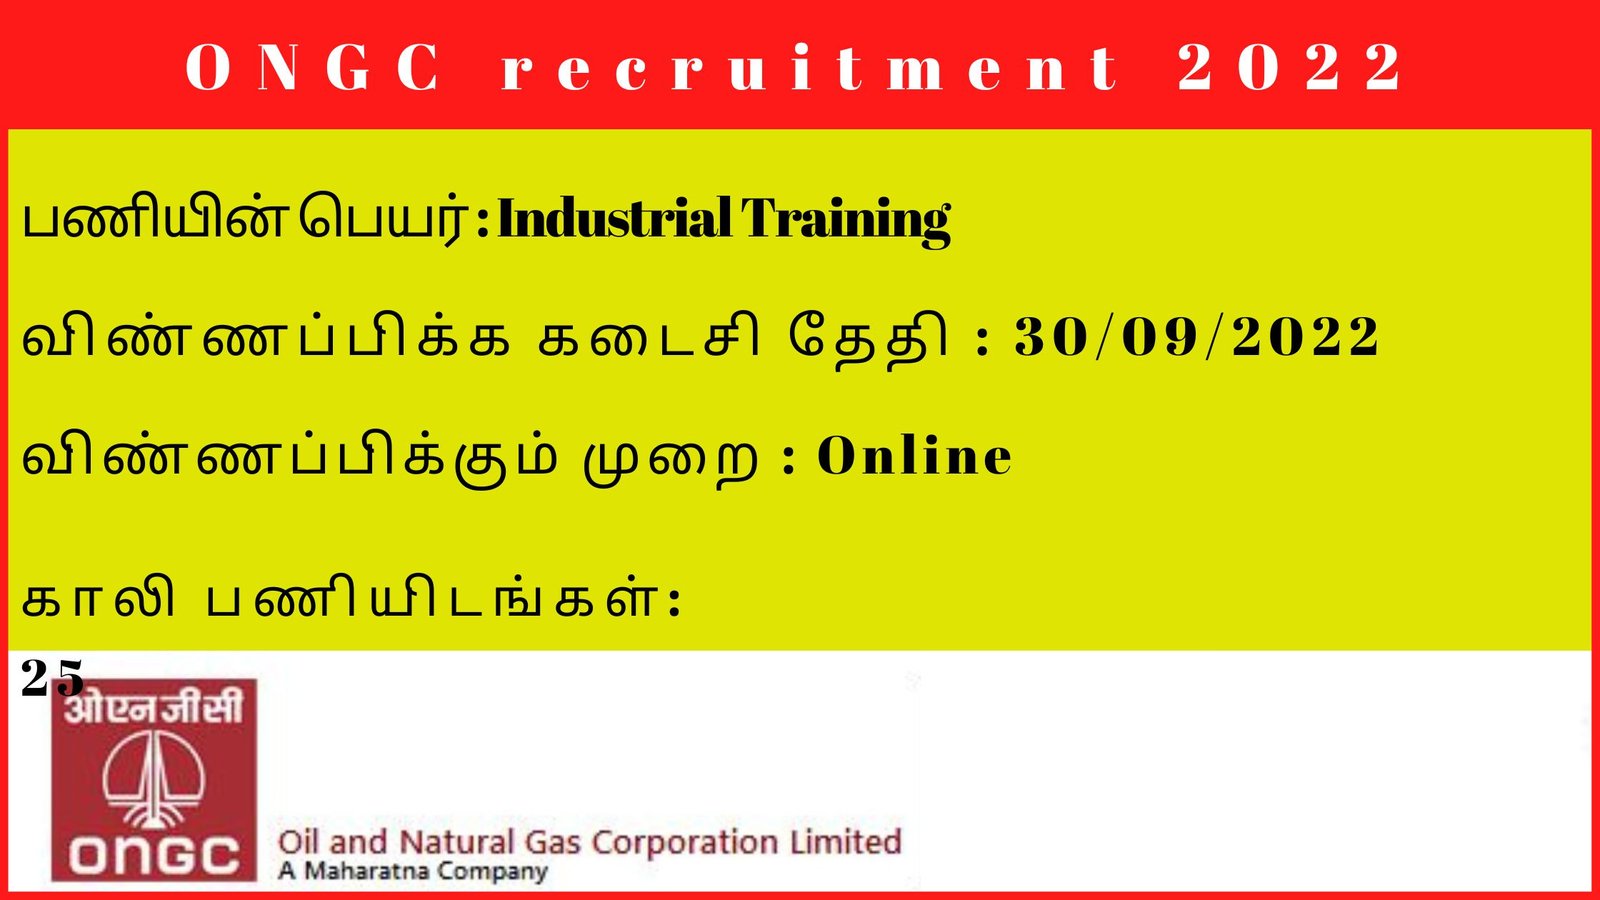 ONGC recruitment 2022